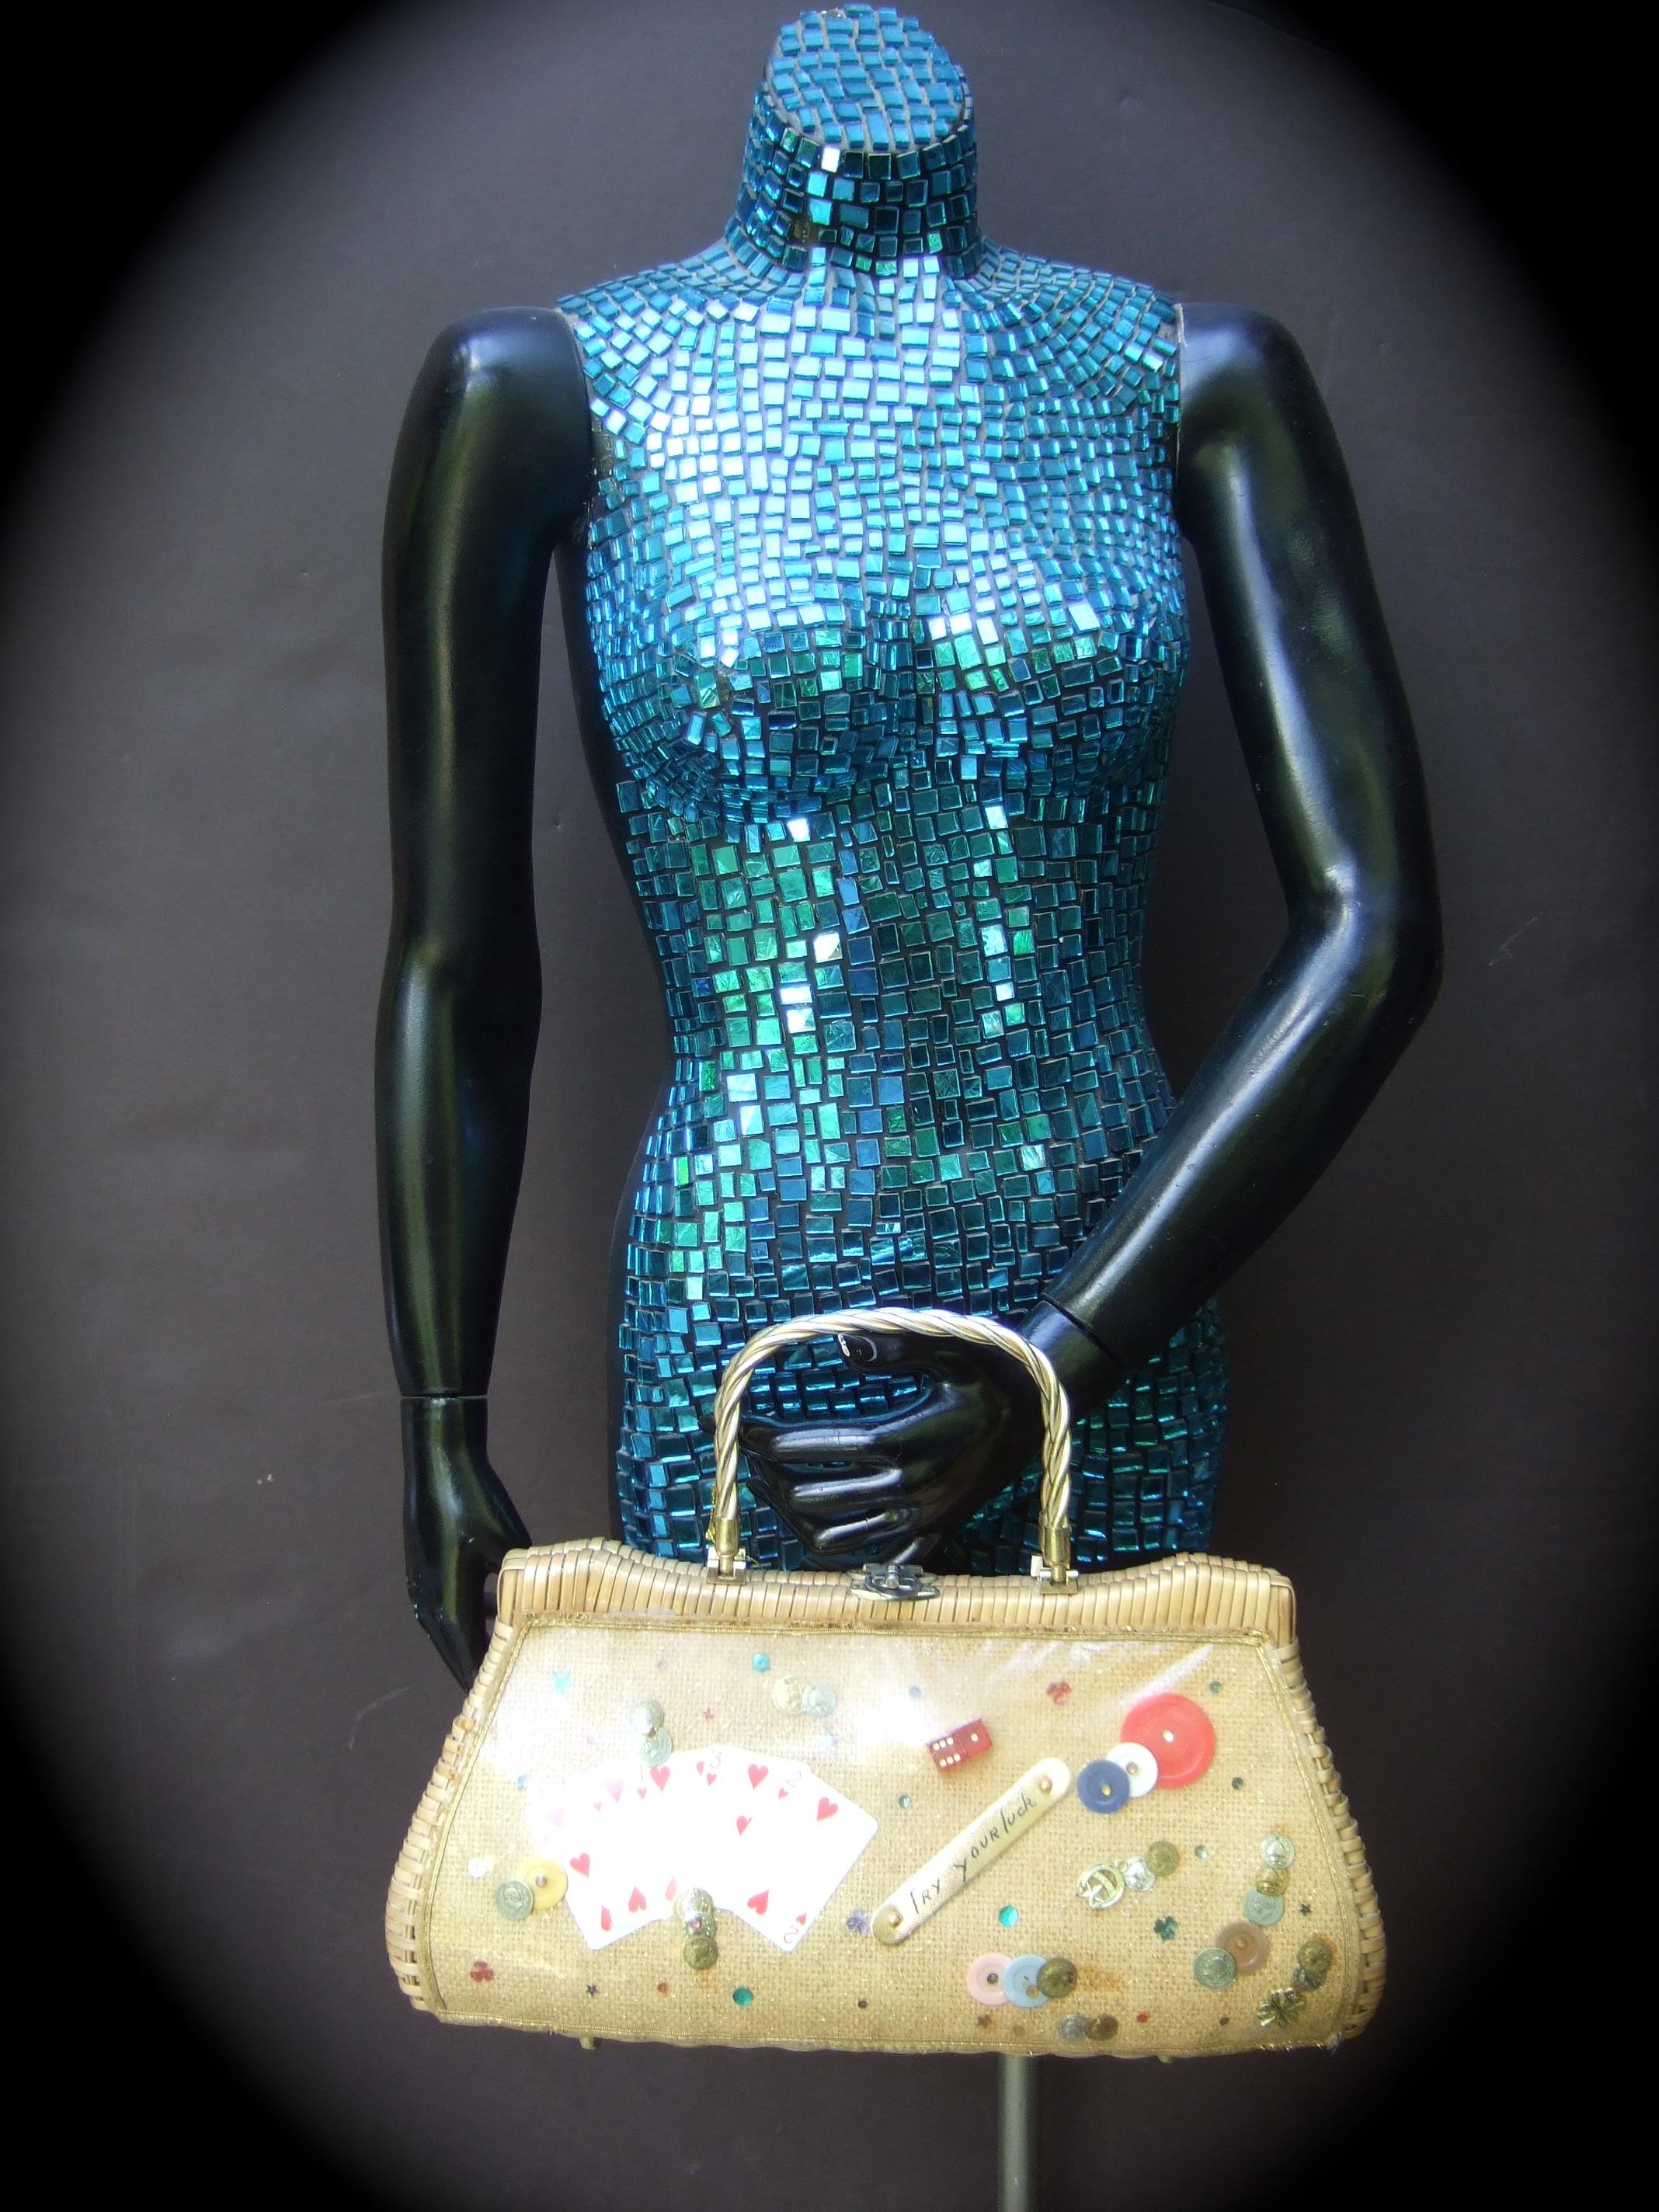 Brown Whimsical Gambling Themed Woven Wicker Retro Handbag c 1960s For Sale